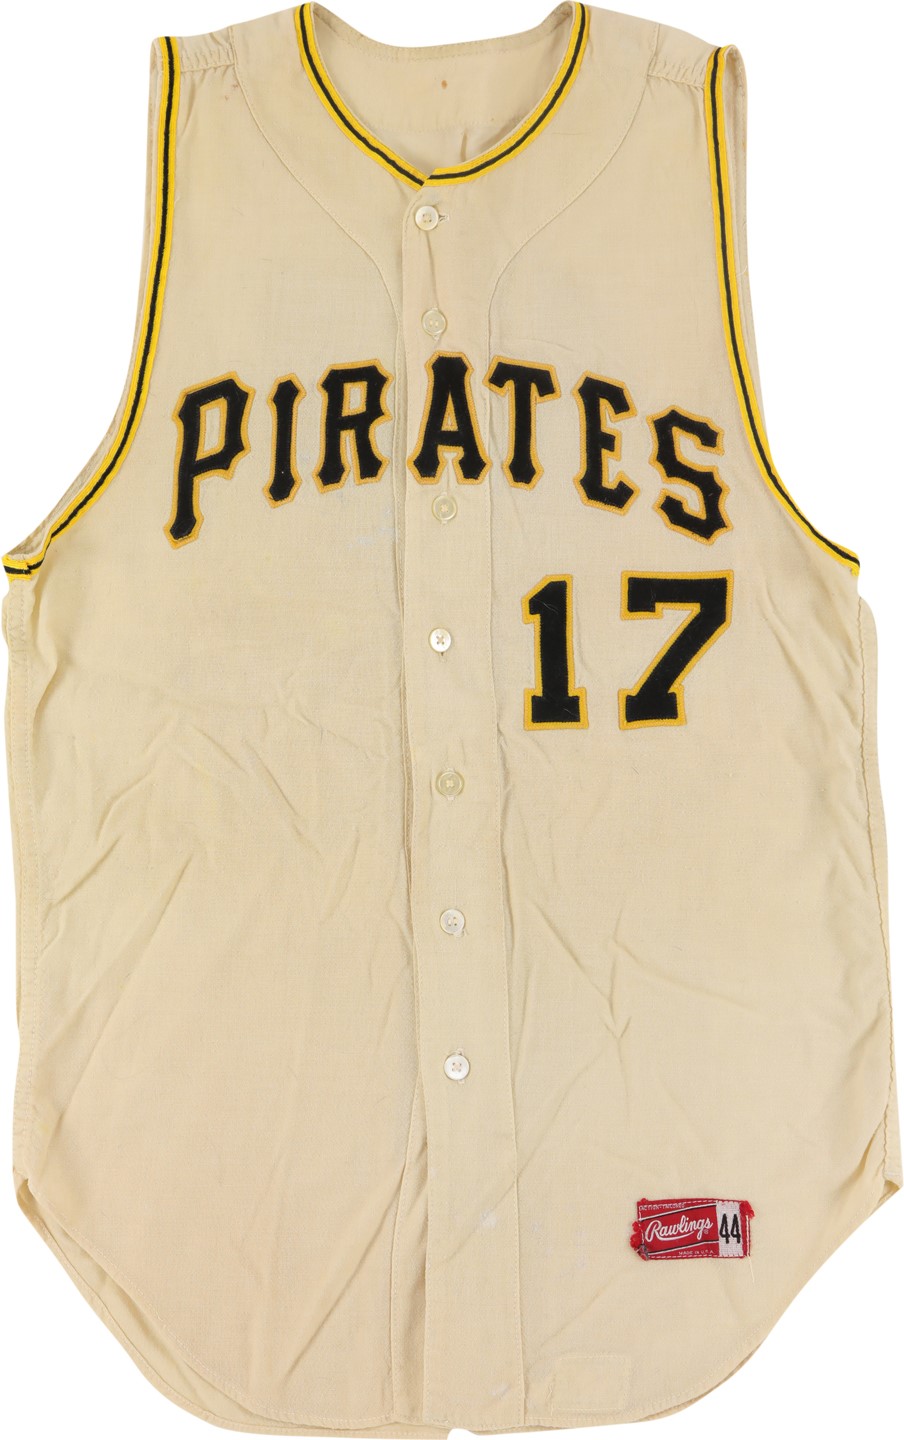 - 1965 Donn Clendenon Pittsburgh Pirates Game Worn Jersey